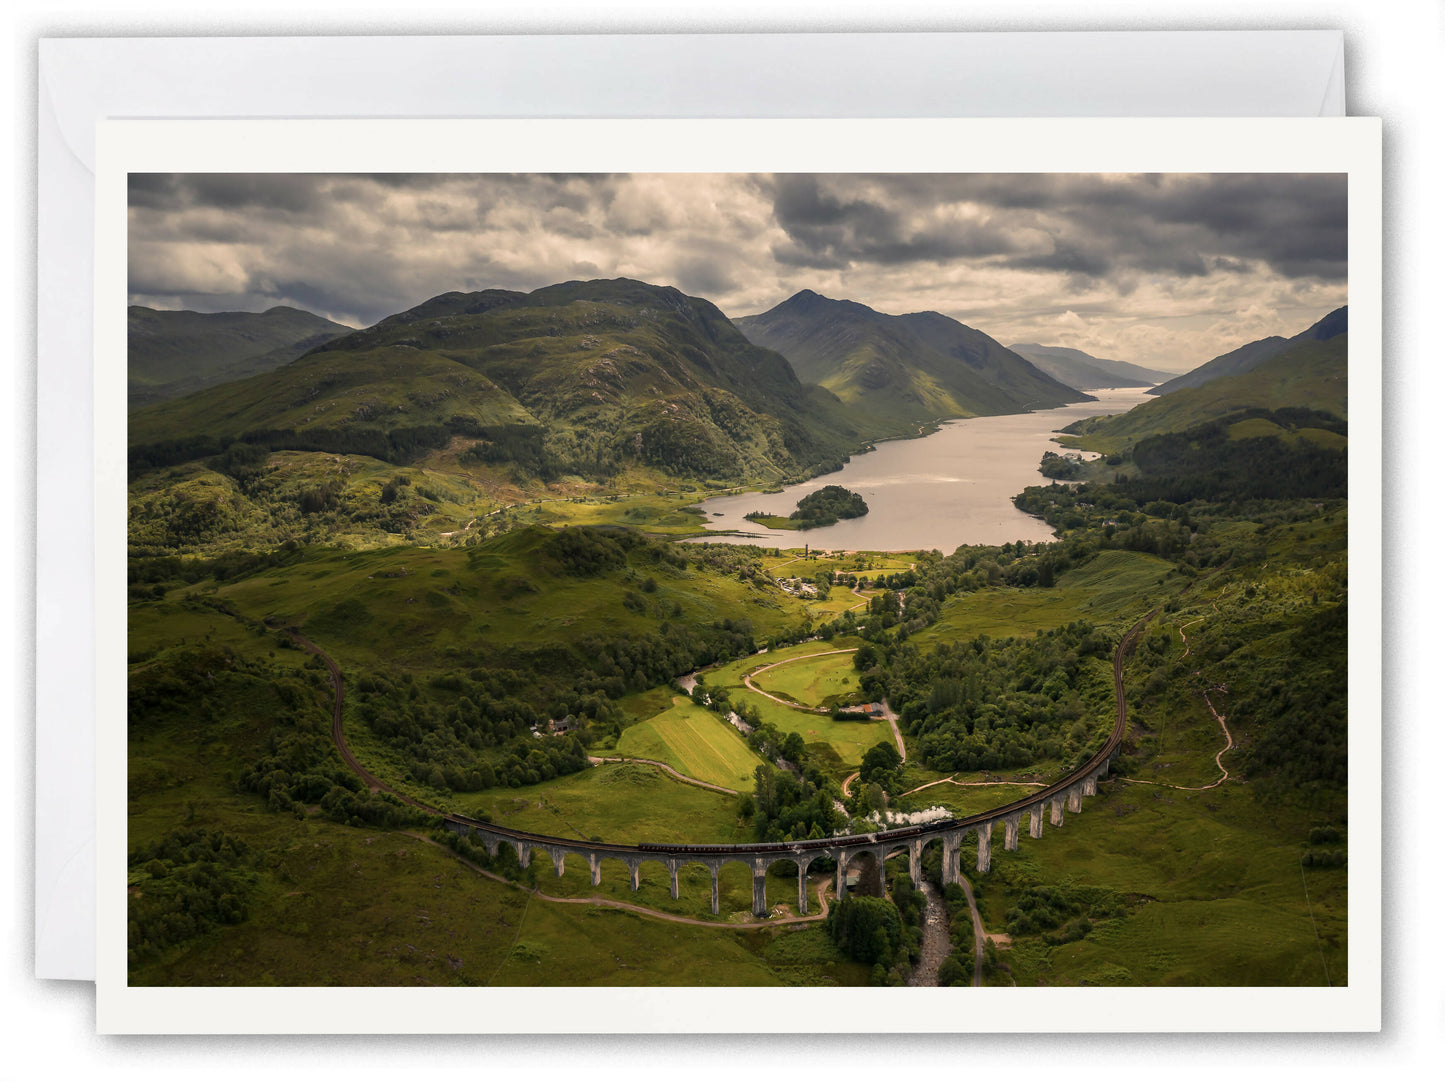 Loch Shiel & Jacobite steam train over Glenfinnan Viaduct - Scotland Greeting Card - Blank Inside